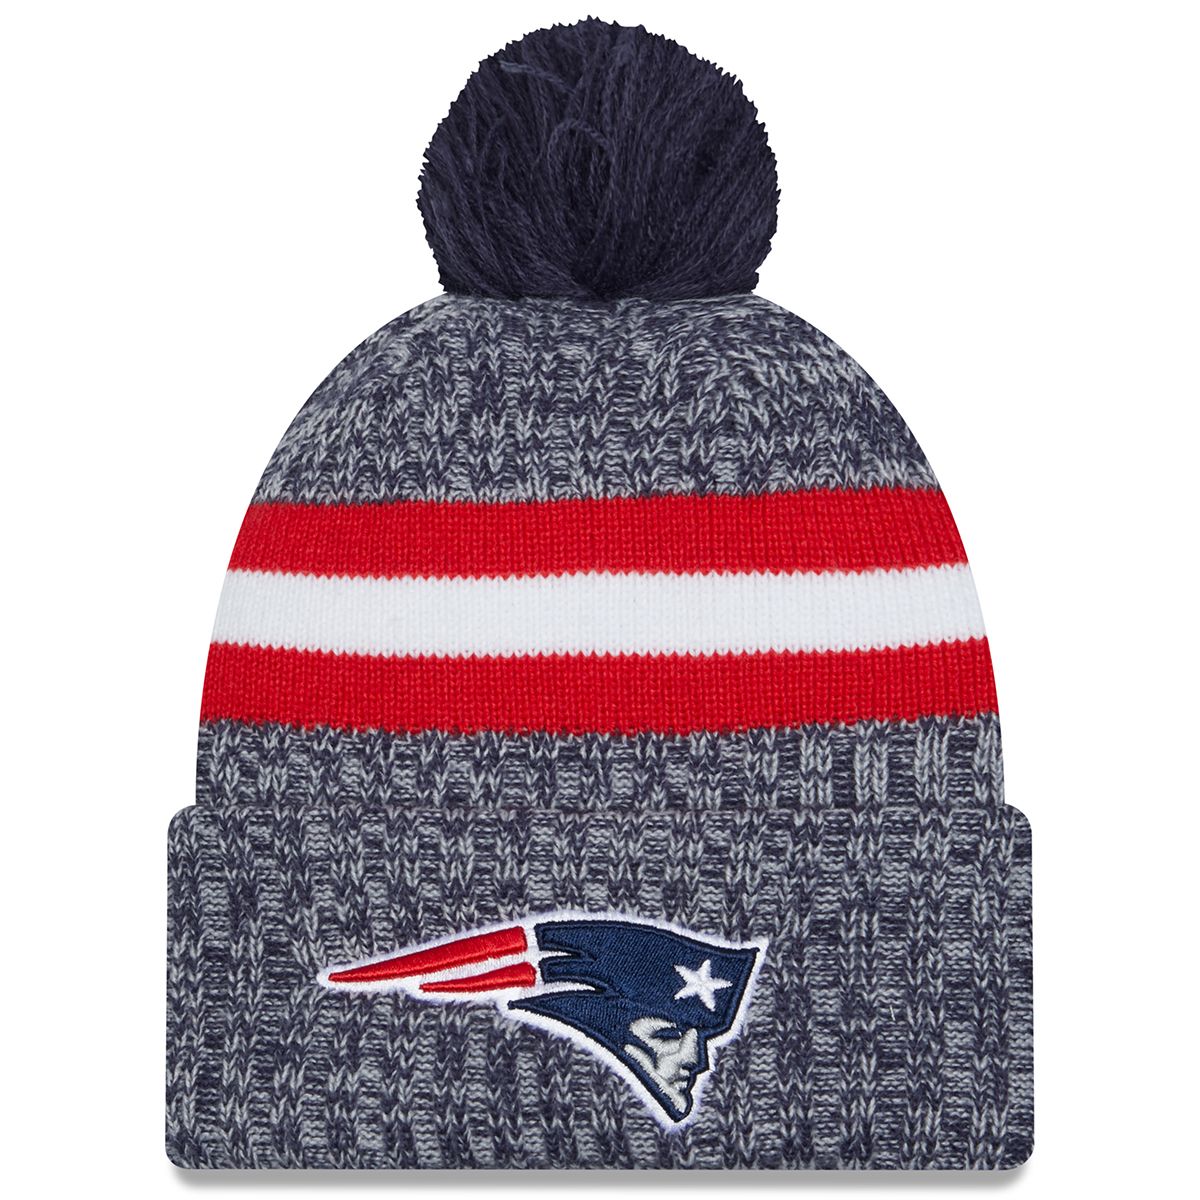 New England Patriots Apparel & Gear: Jerseys, Hats & More